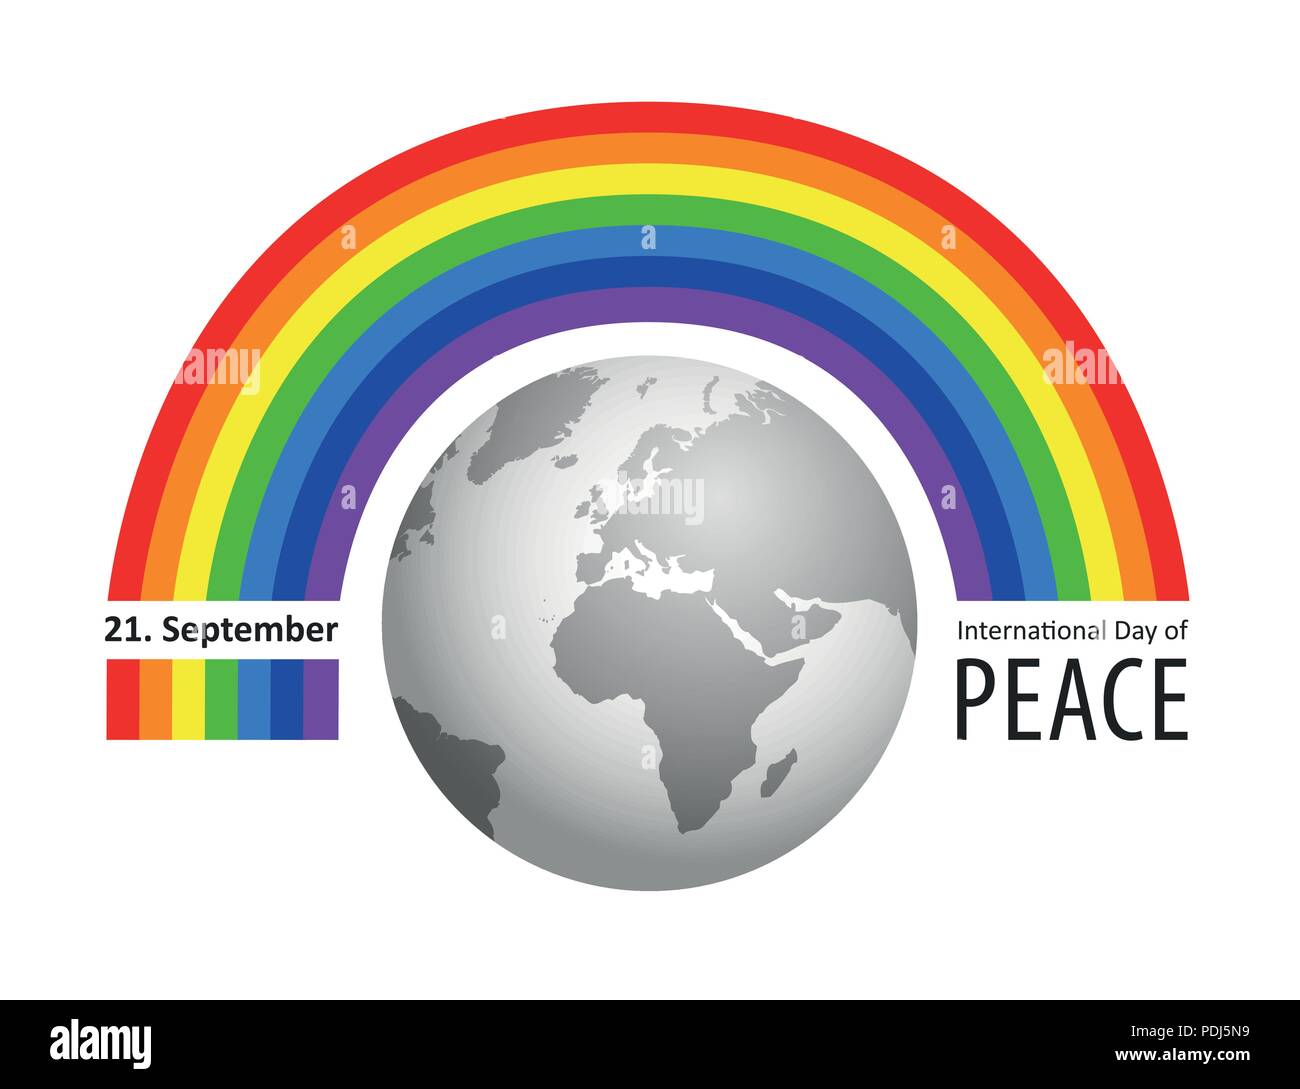 international day of peace rainbow 21 september vector illustration Stock Vector